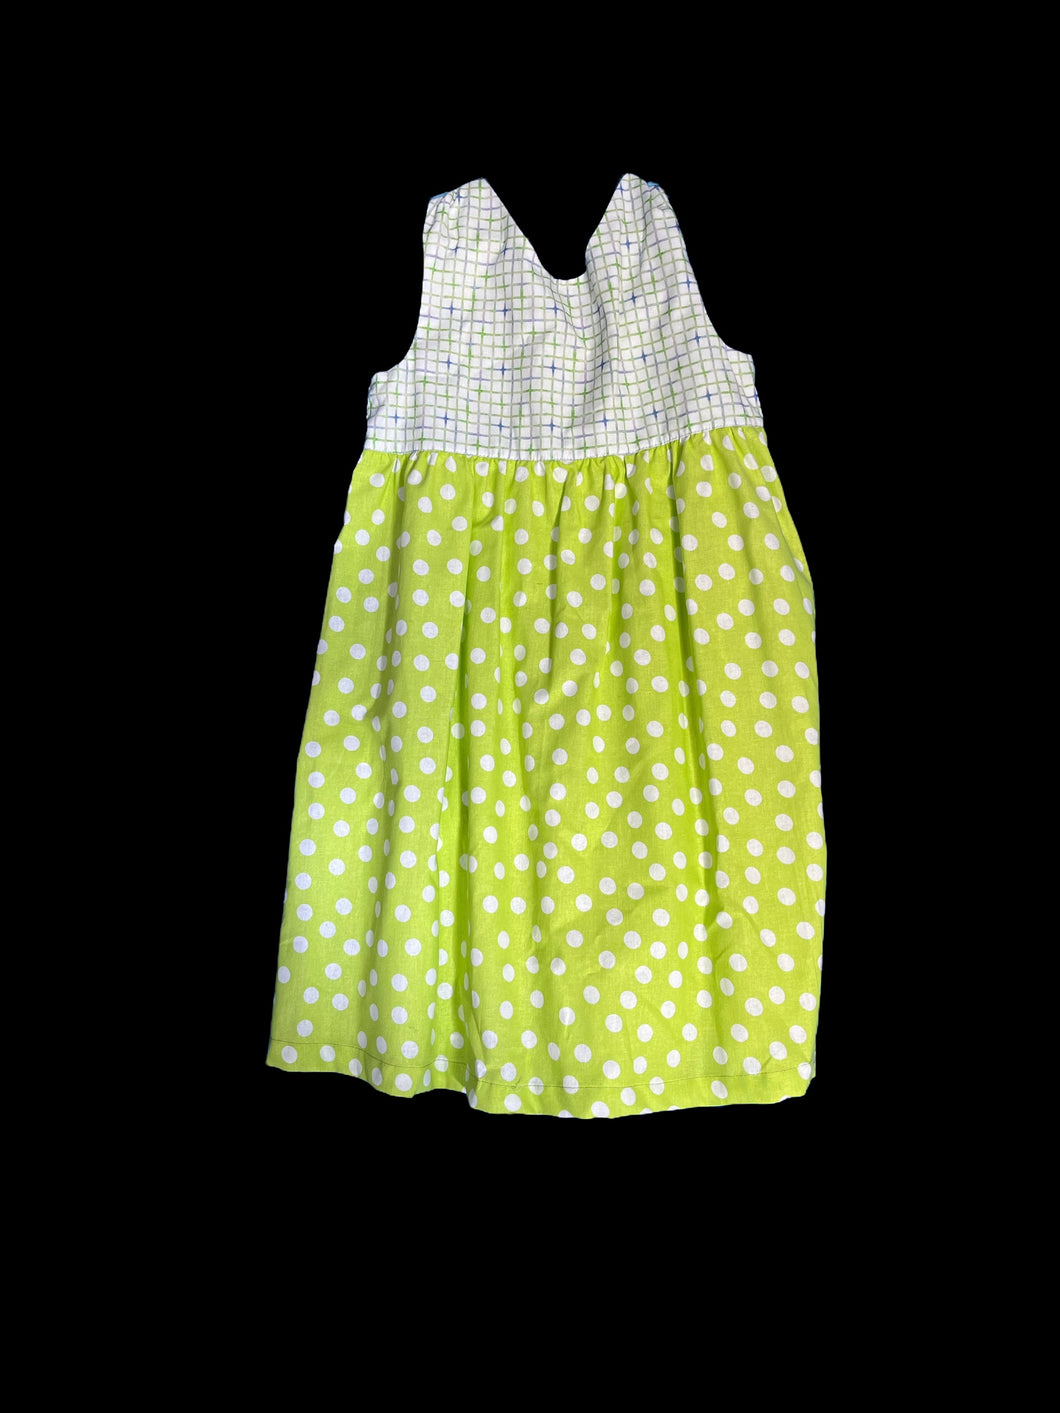 Green polka dot dress (size 6)